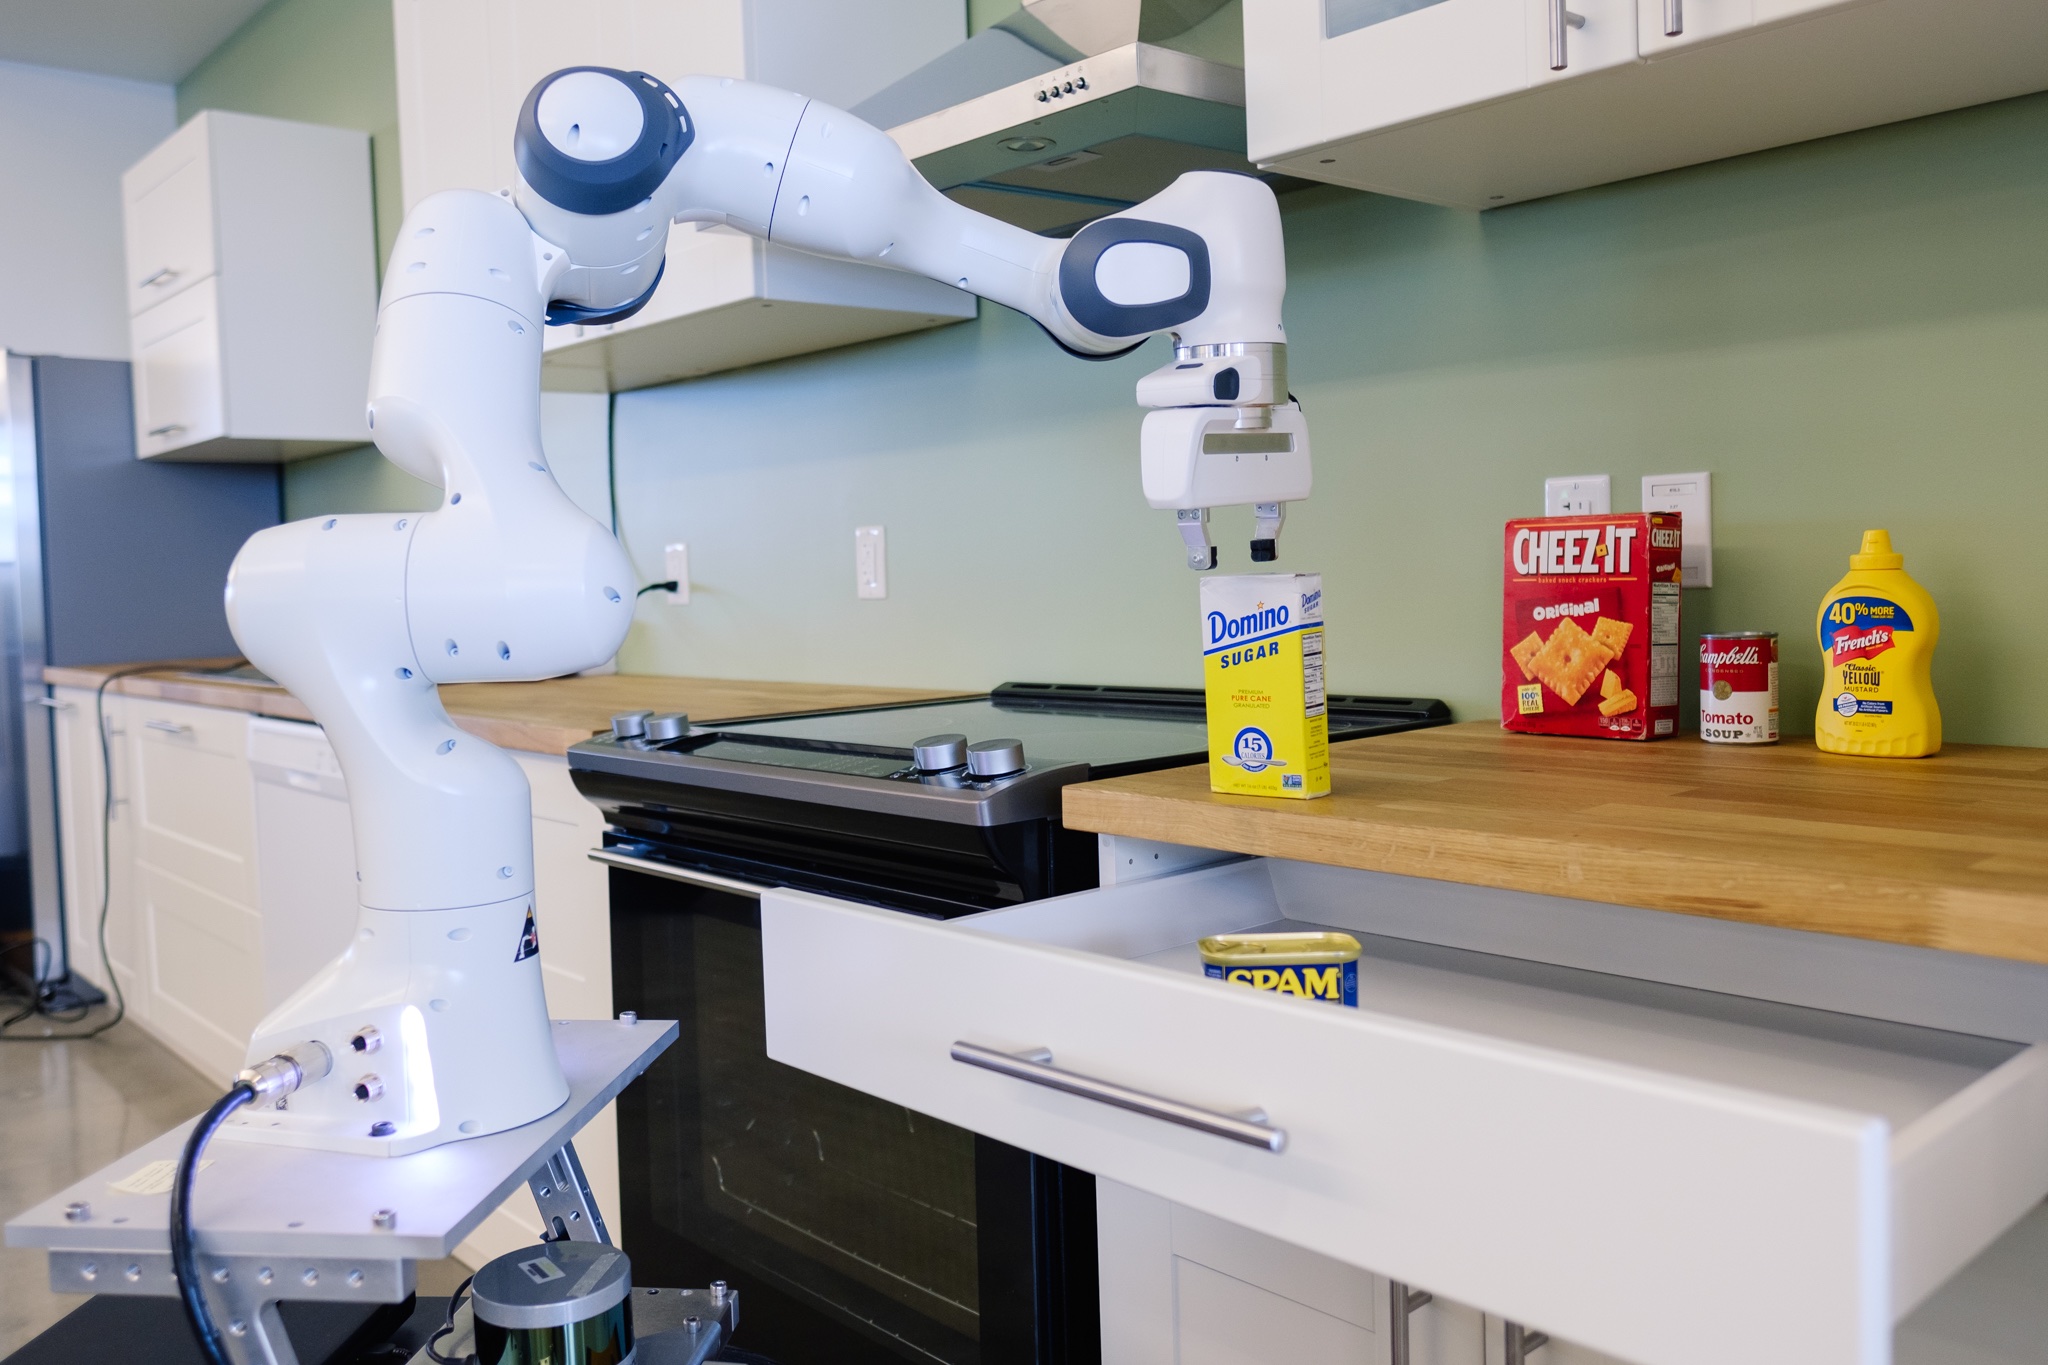 Bliv oppe Intervenere Modsatte Nvidia Launches New Robotics Lab in Seattle - IEEE Spectrum